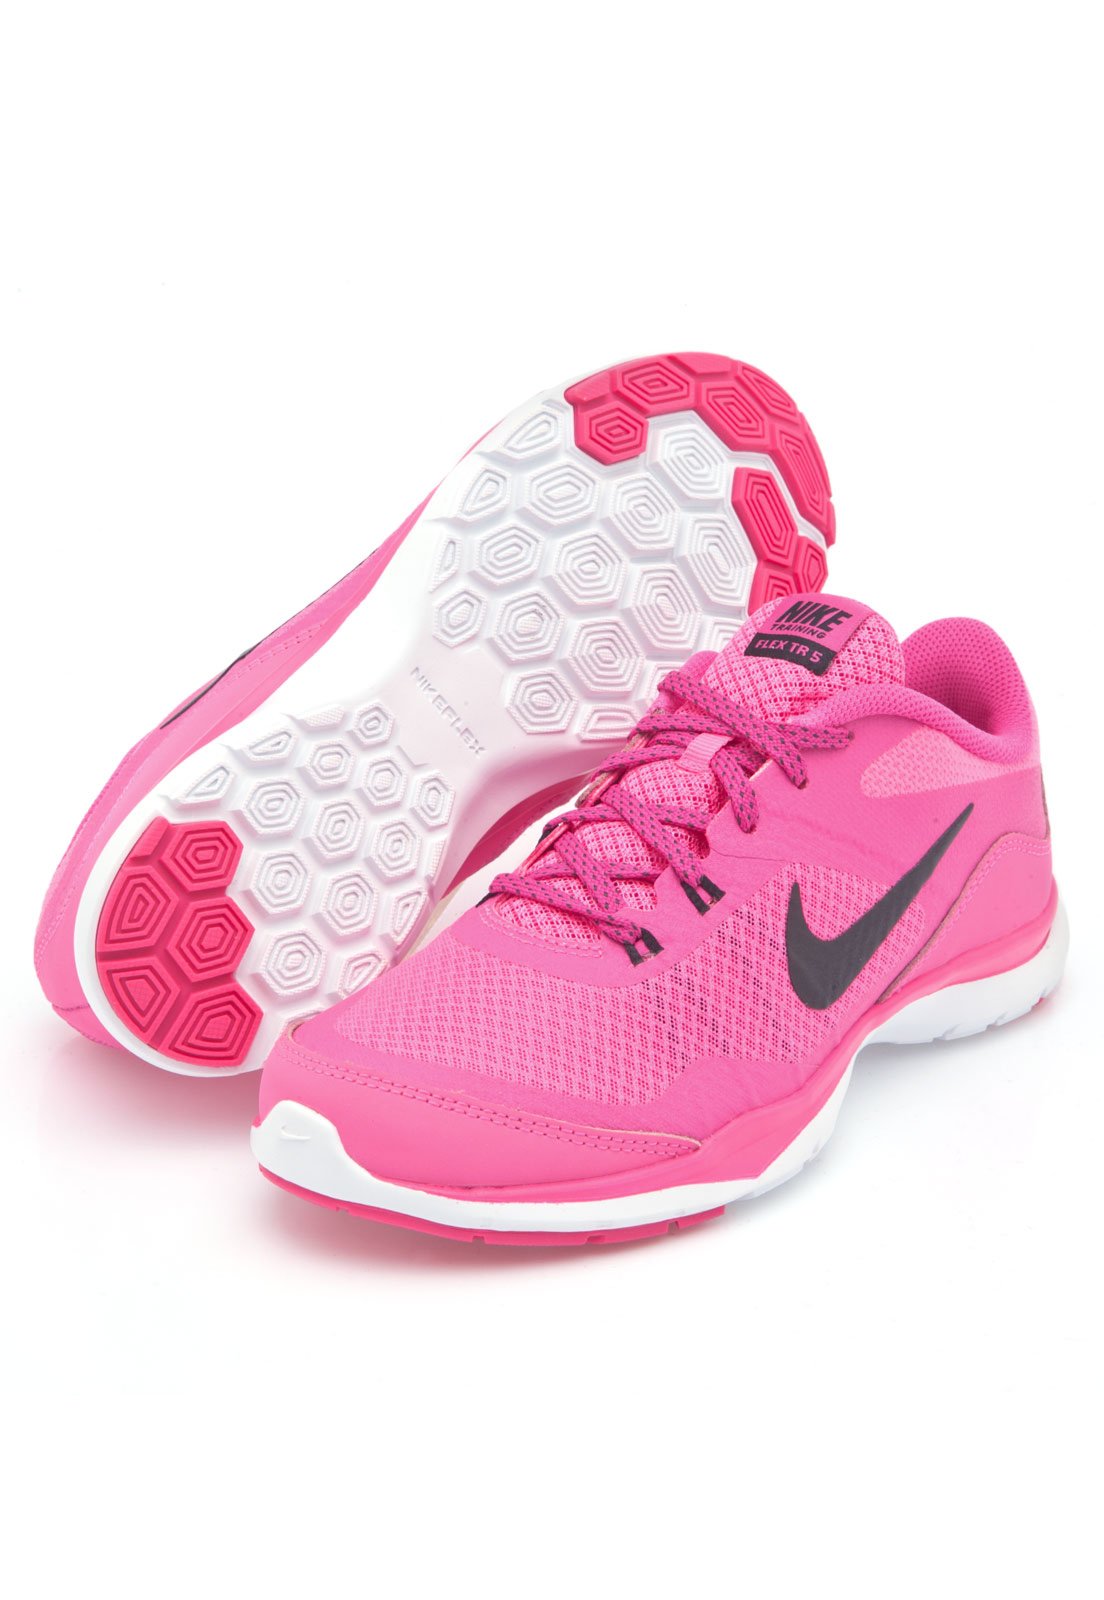 tenis rosa pink feminino